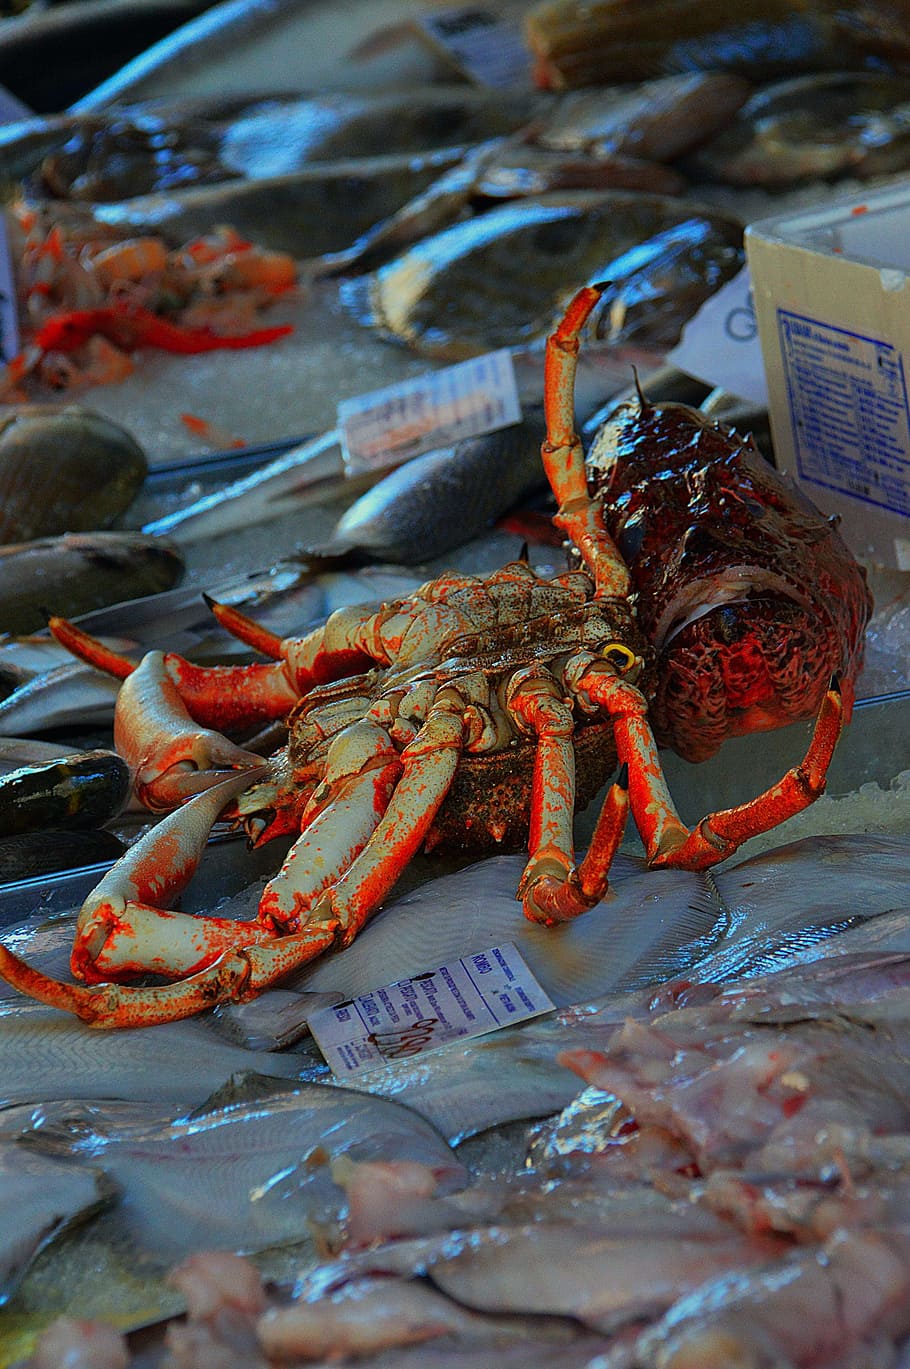 cáncer, mercado de pescado, frutos de tenge, mar, vida, criaturas marinas, comida, mariscos, crustáceos, cangrejos